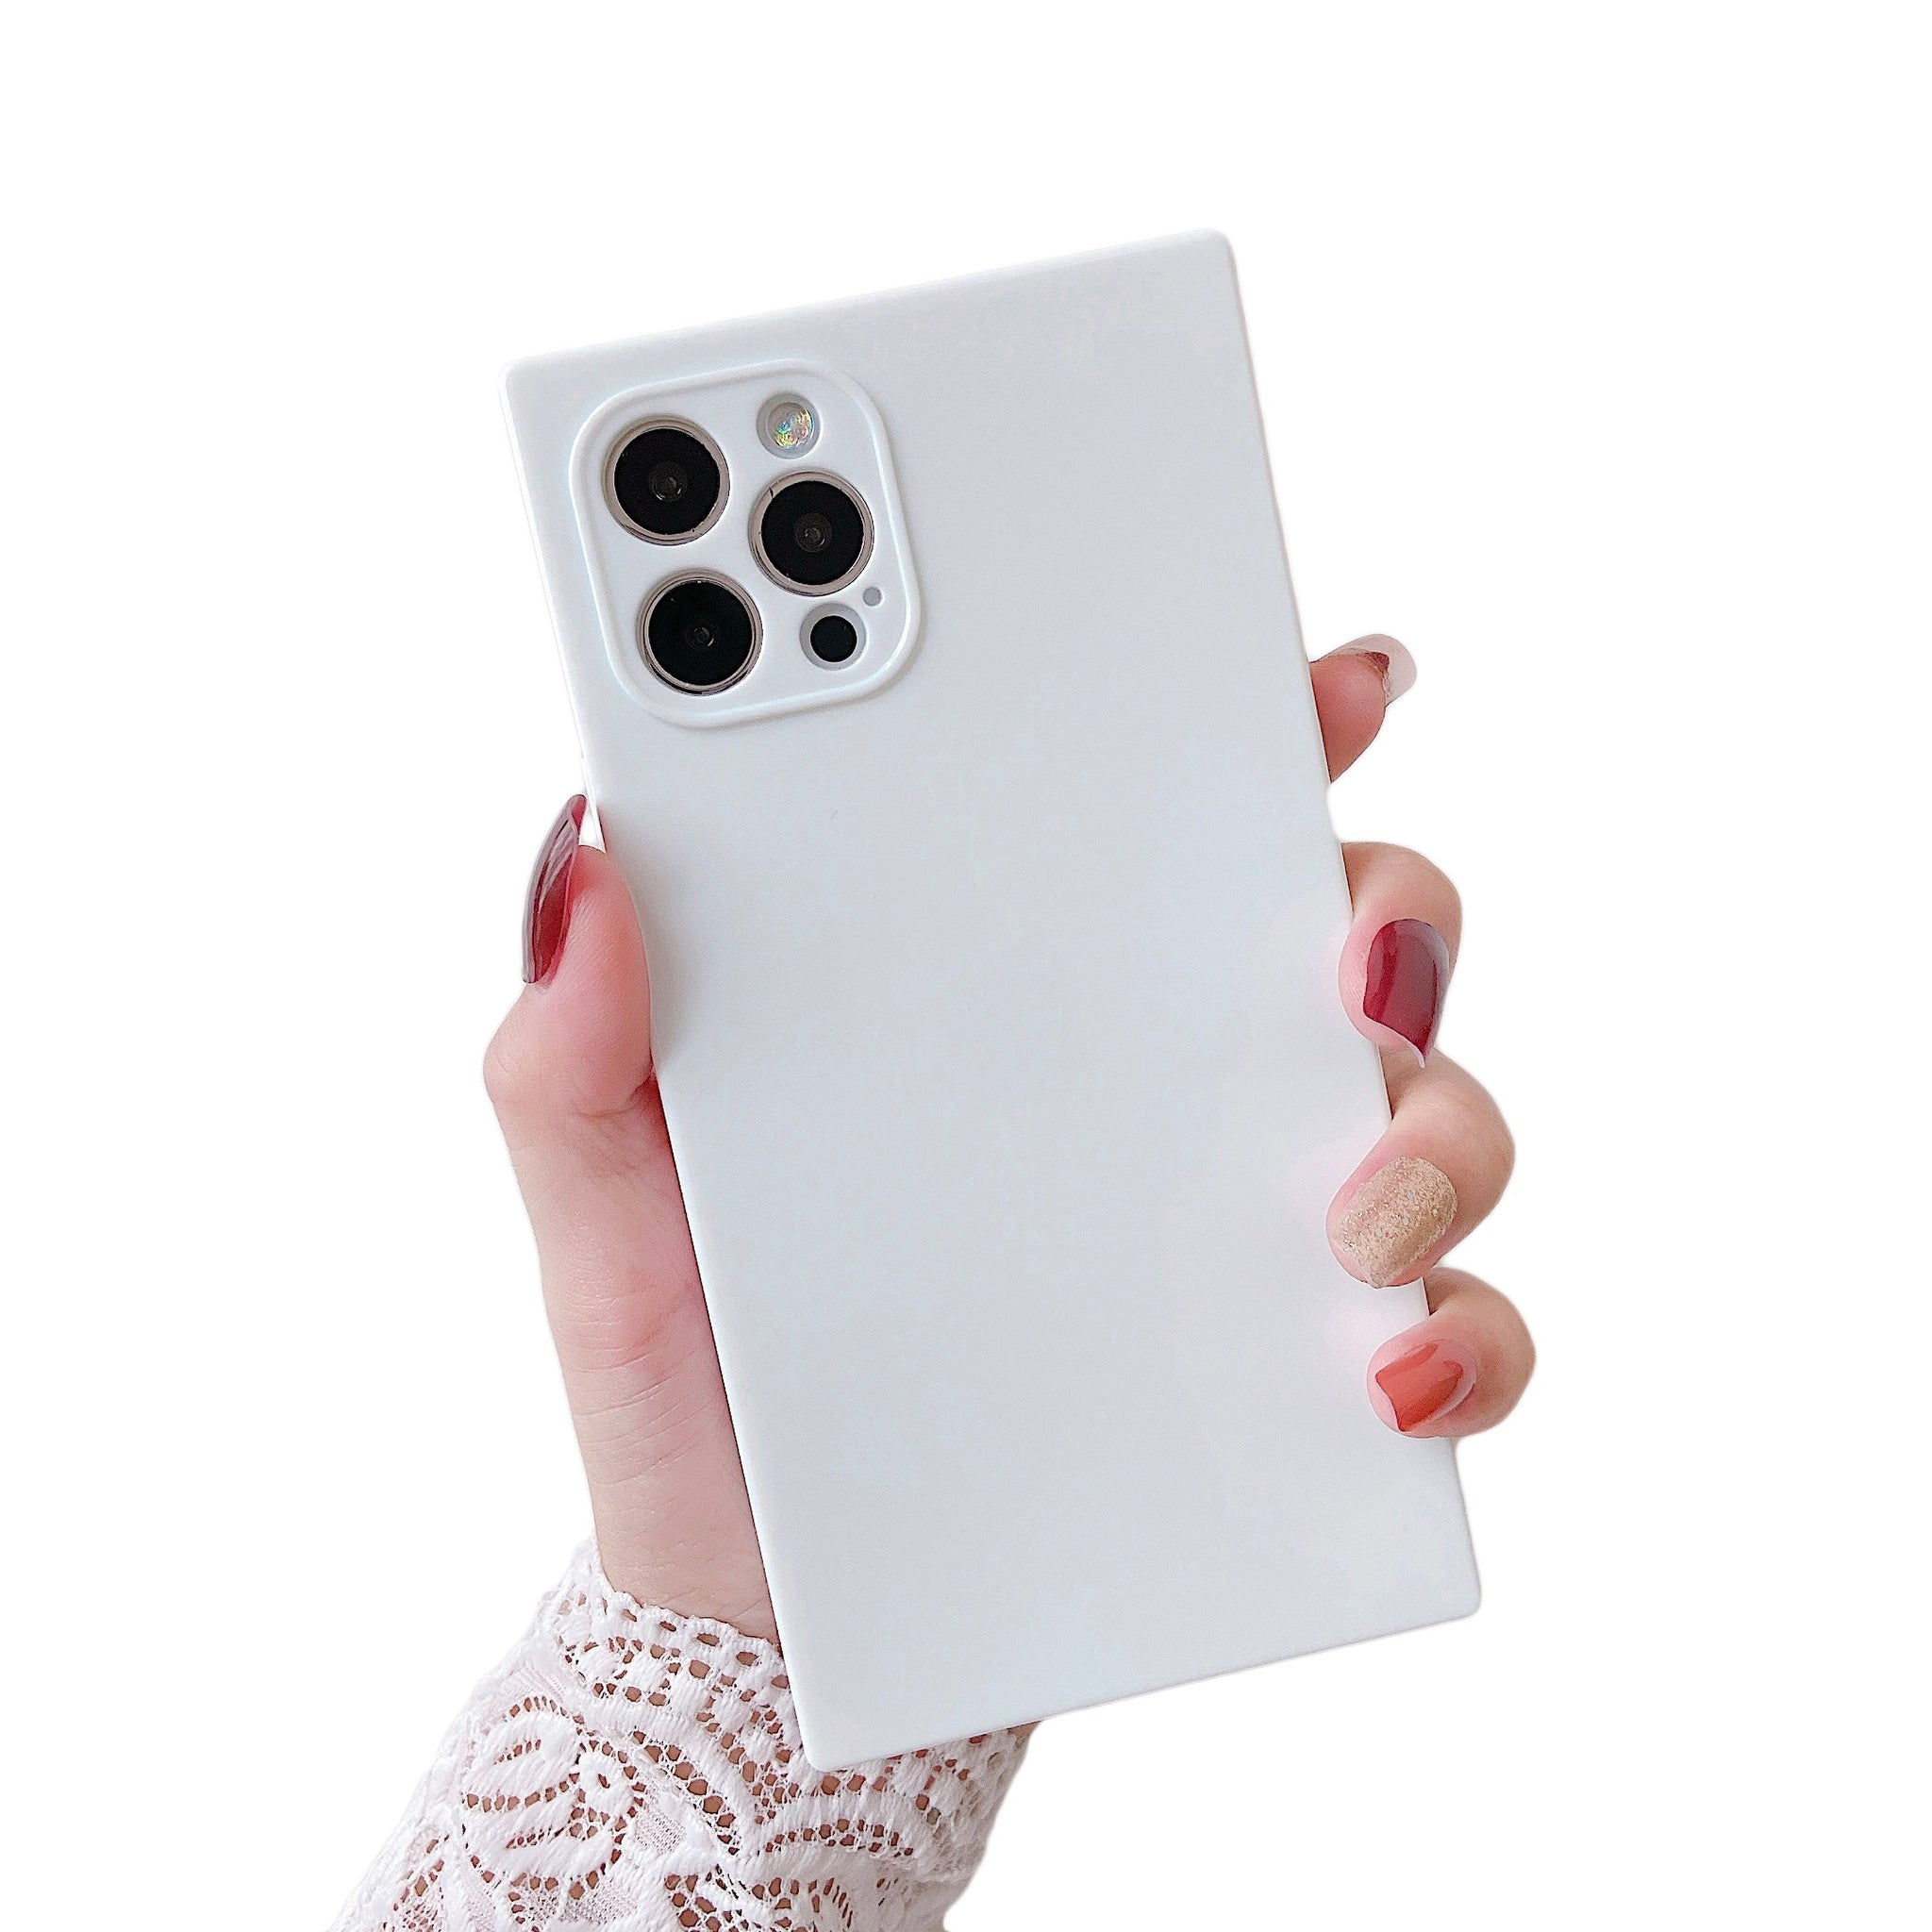 iPhone 11 Pro Max Case Square Plain Color (White)